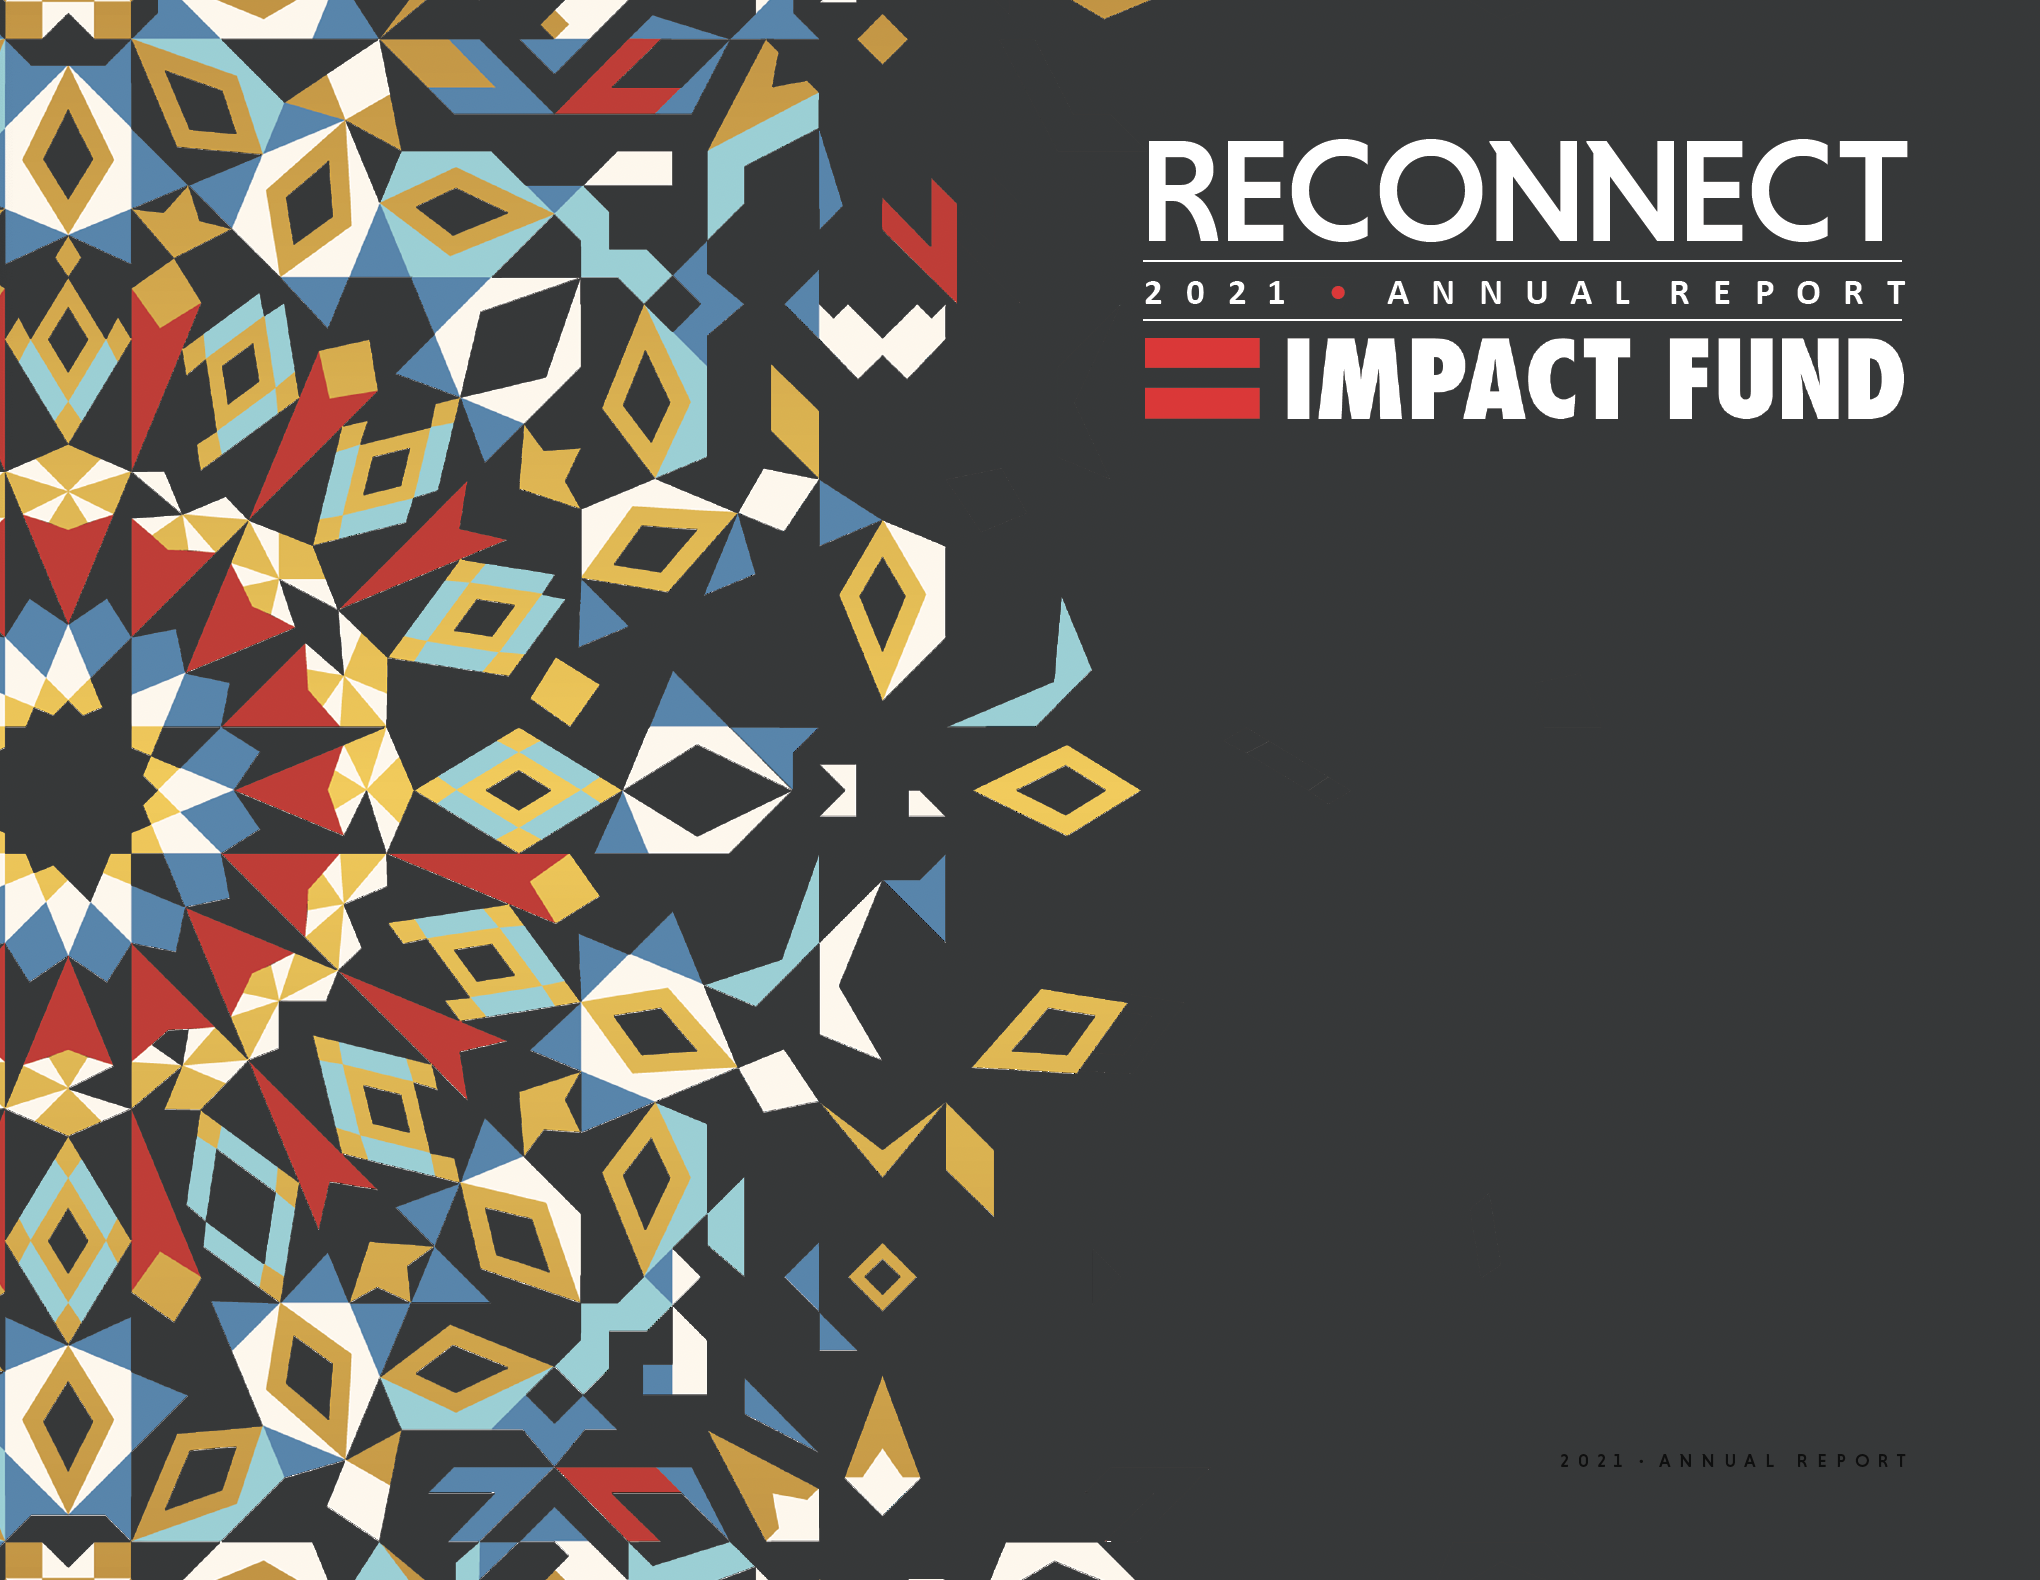 AltCap Relief Fund Impact Report for 2021